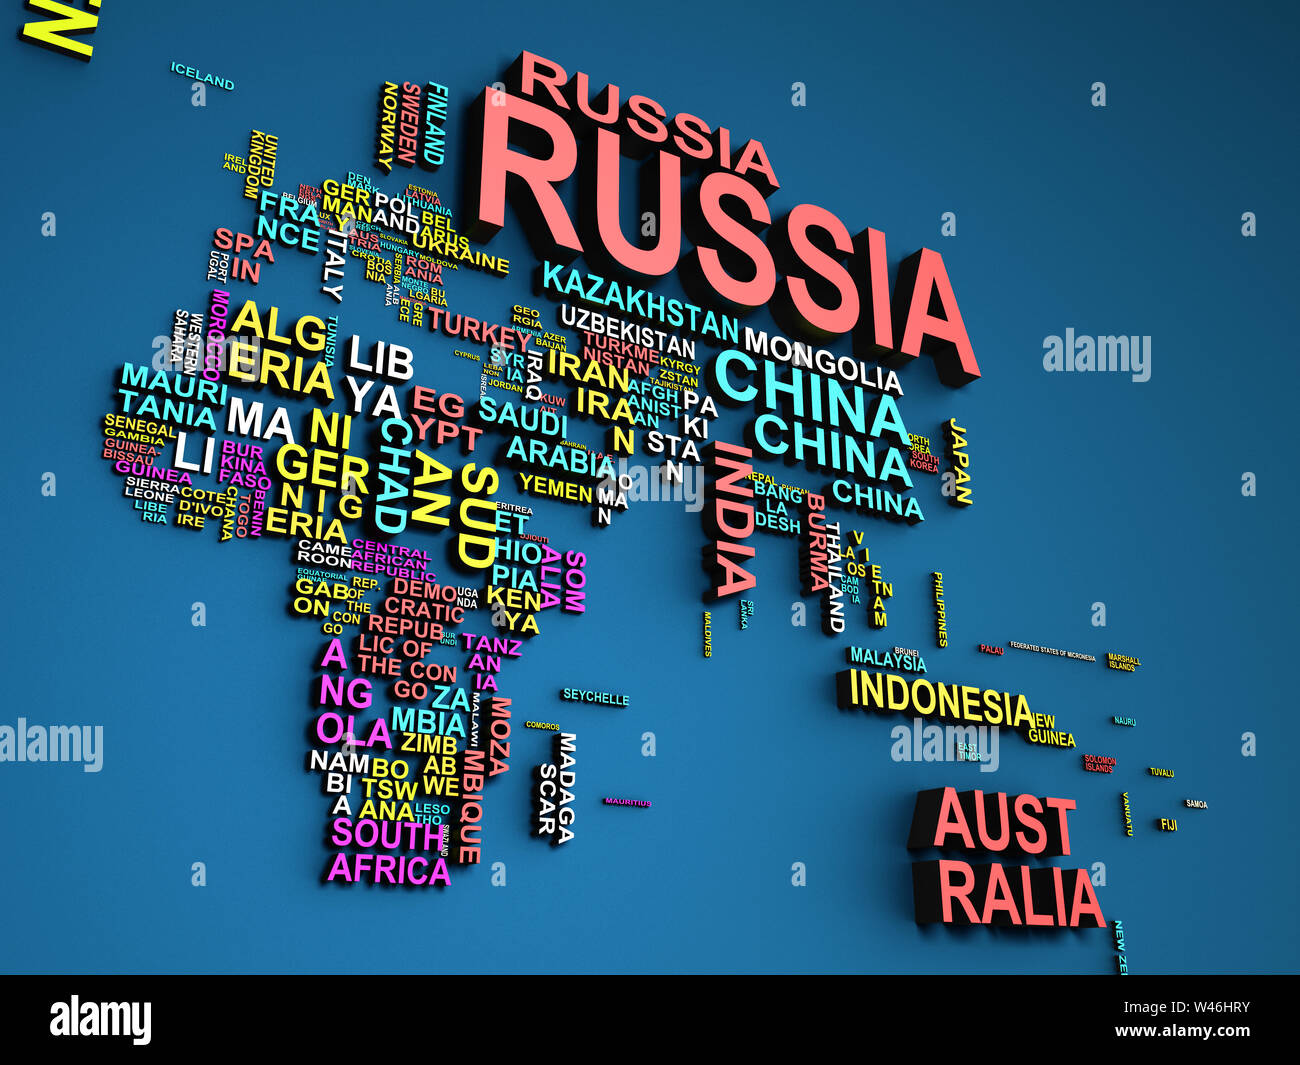 Map of the world with names fotografías e imágenes de alta resolución -  Página 10 - Alamy